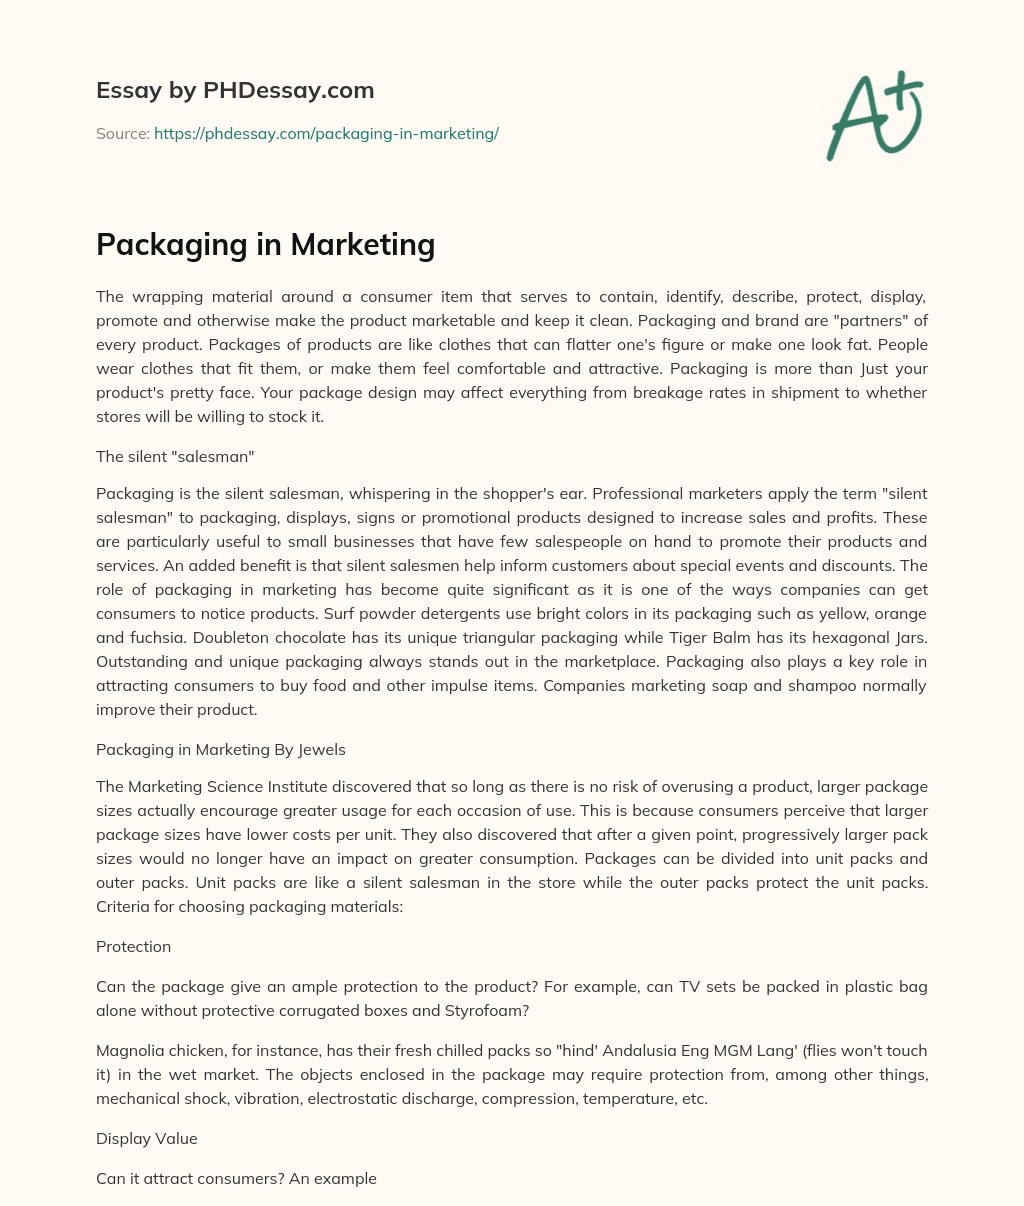 Packaging in Marketing essay